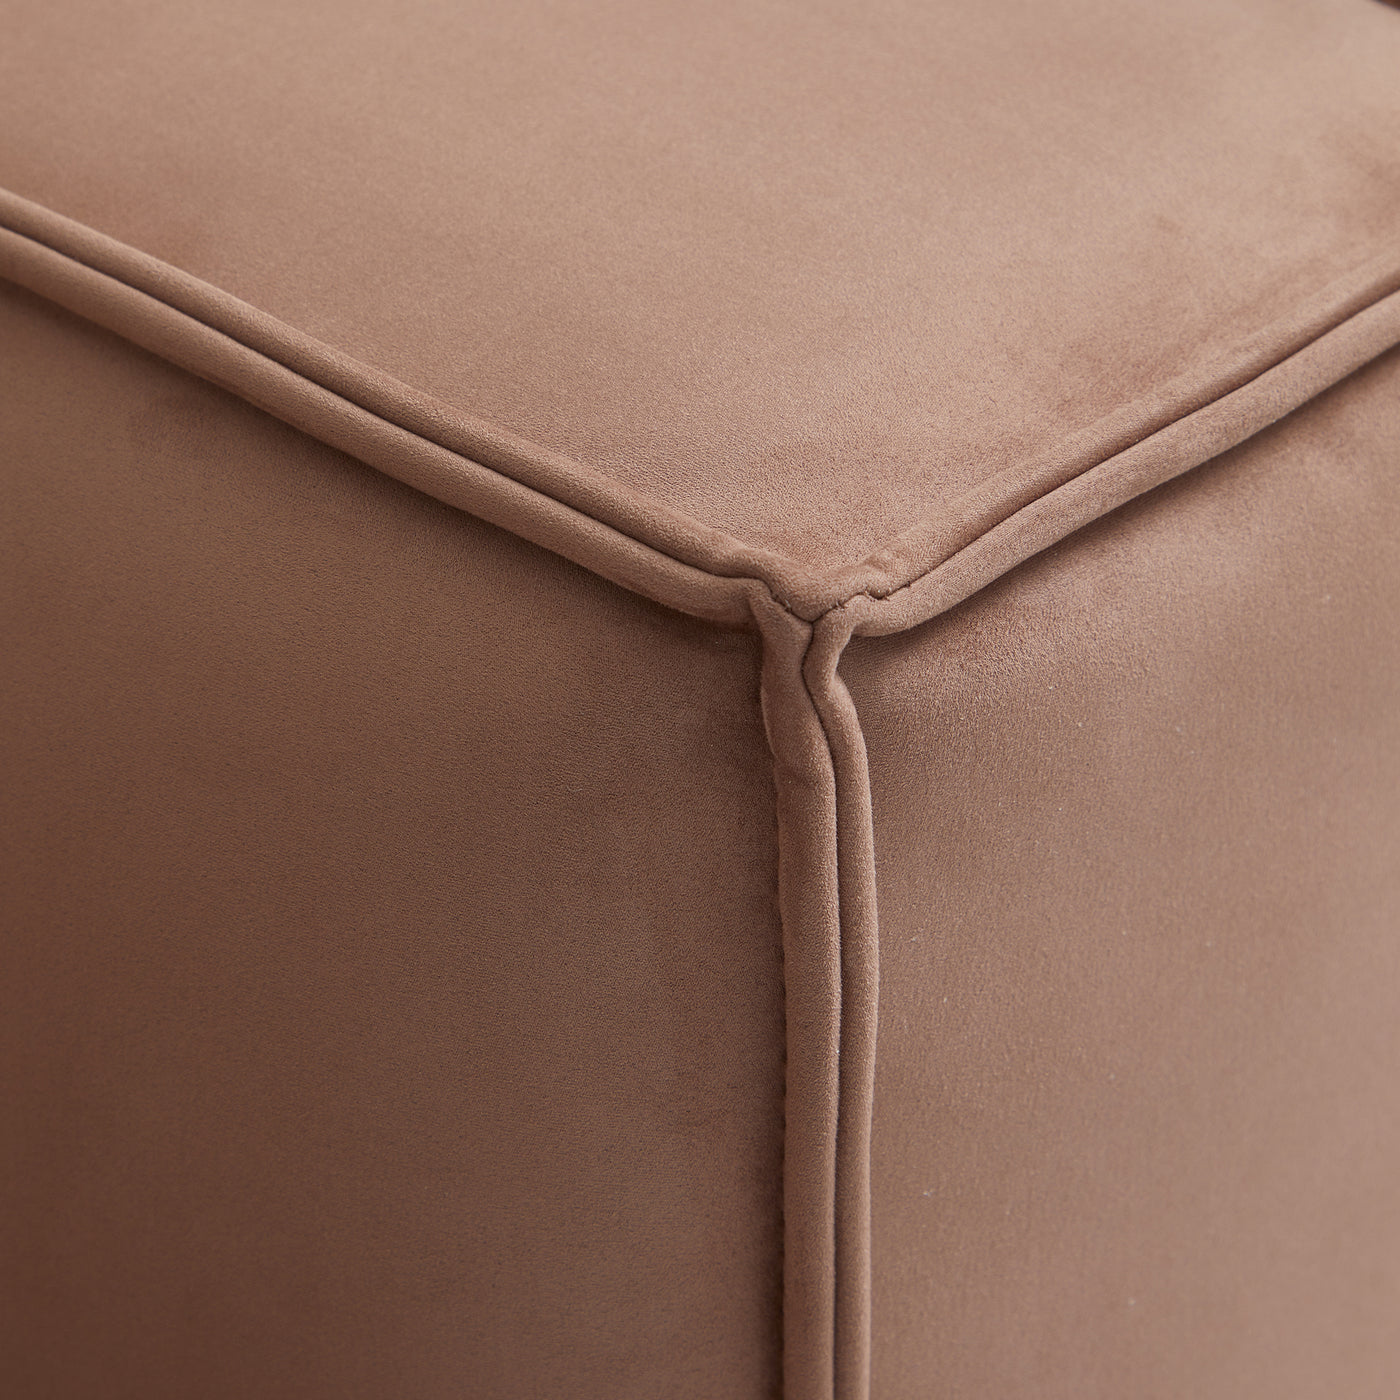 Luxury Minimalist Brown Fabric Sofa-Brown